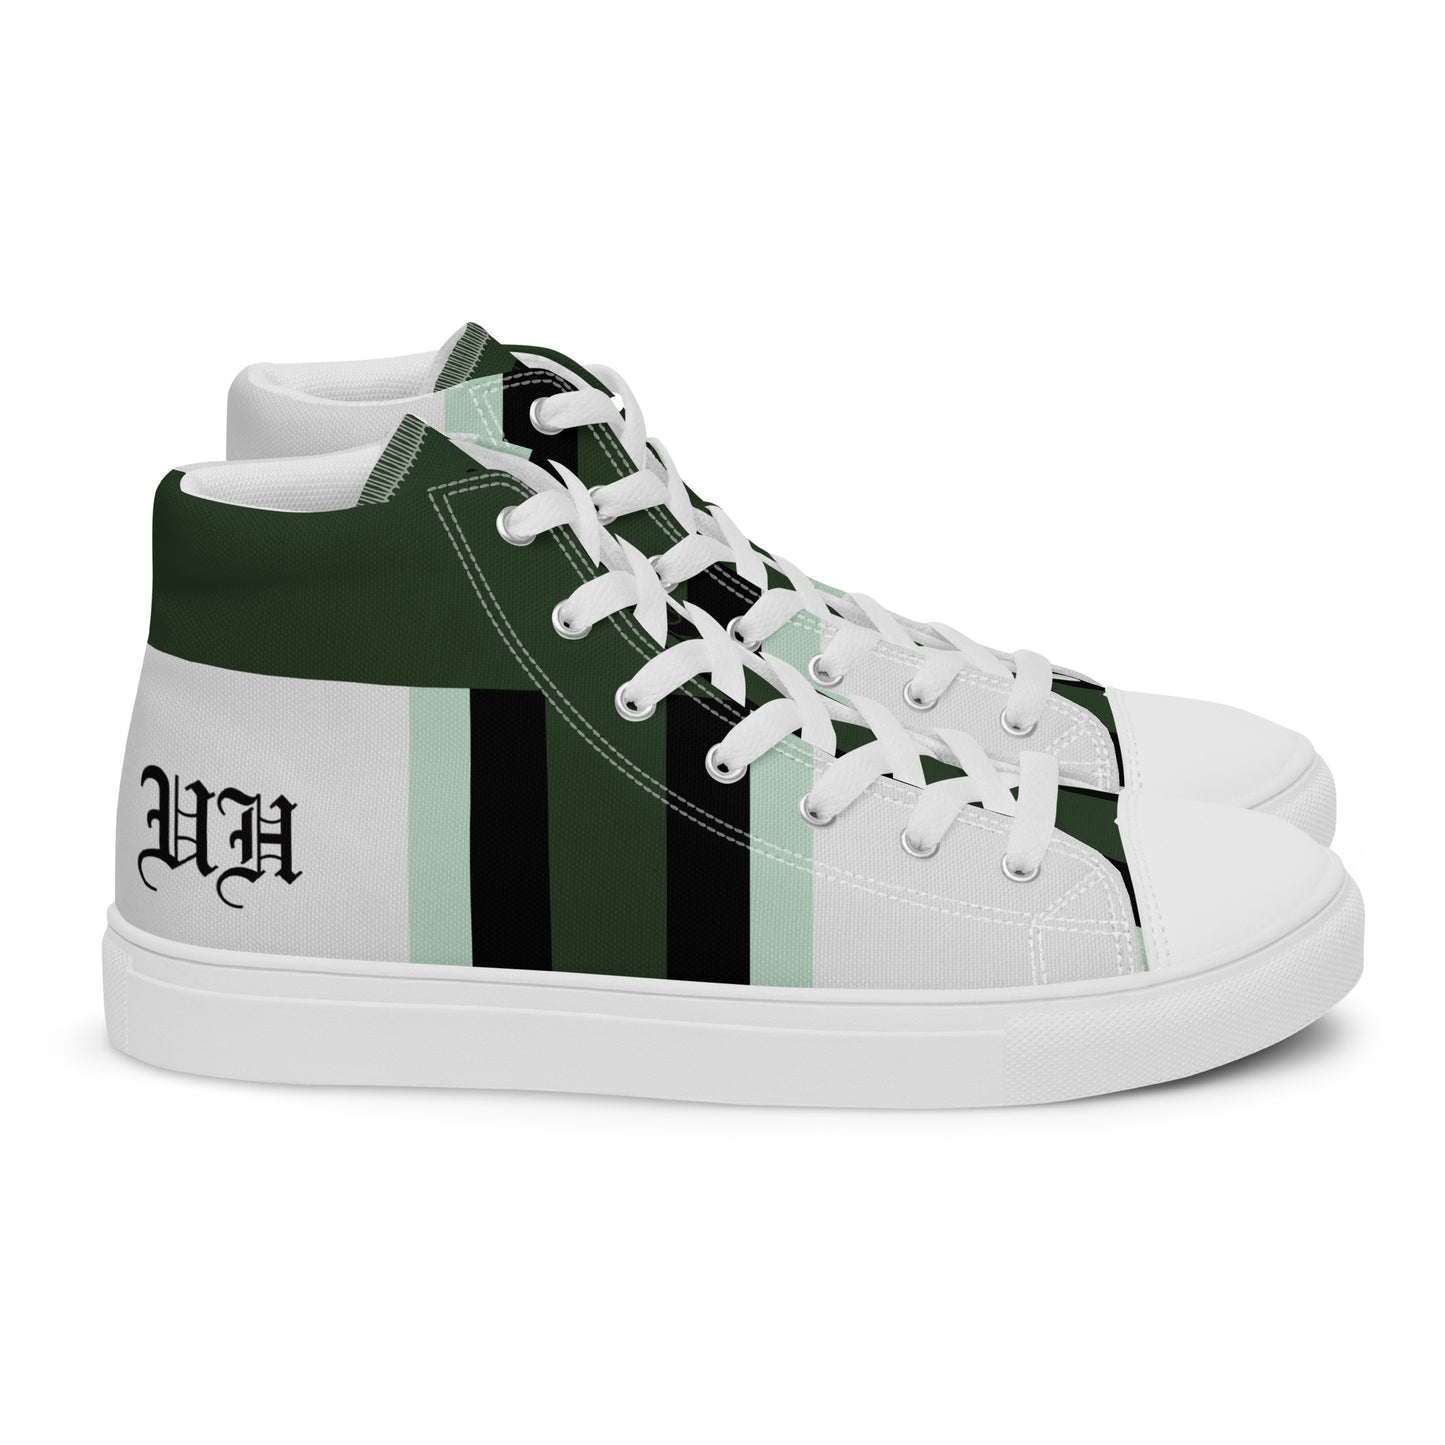 Ulli Hahn green line Shoe's